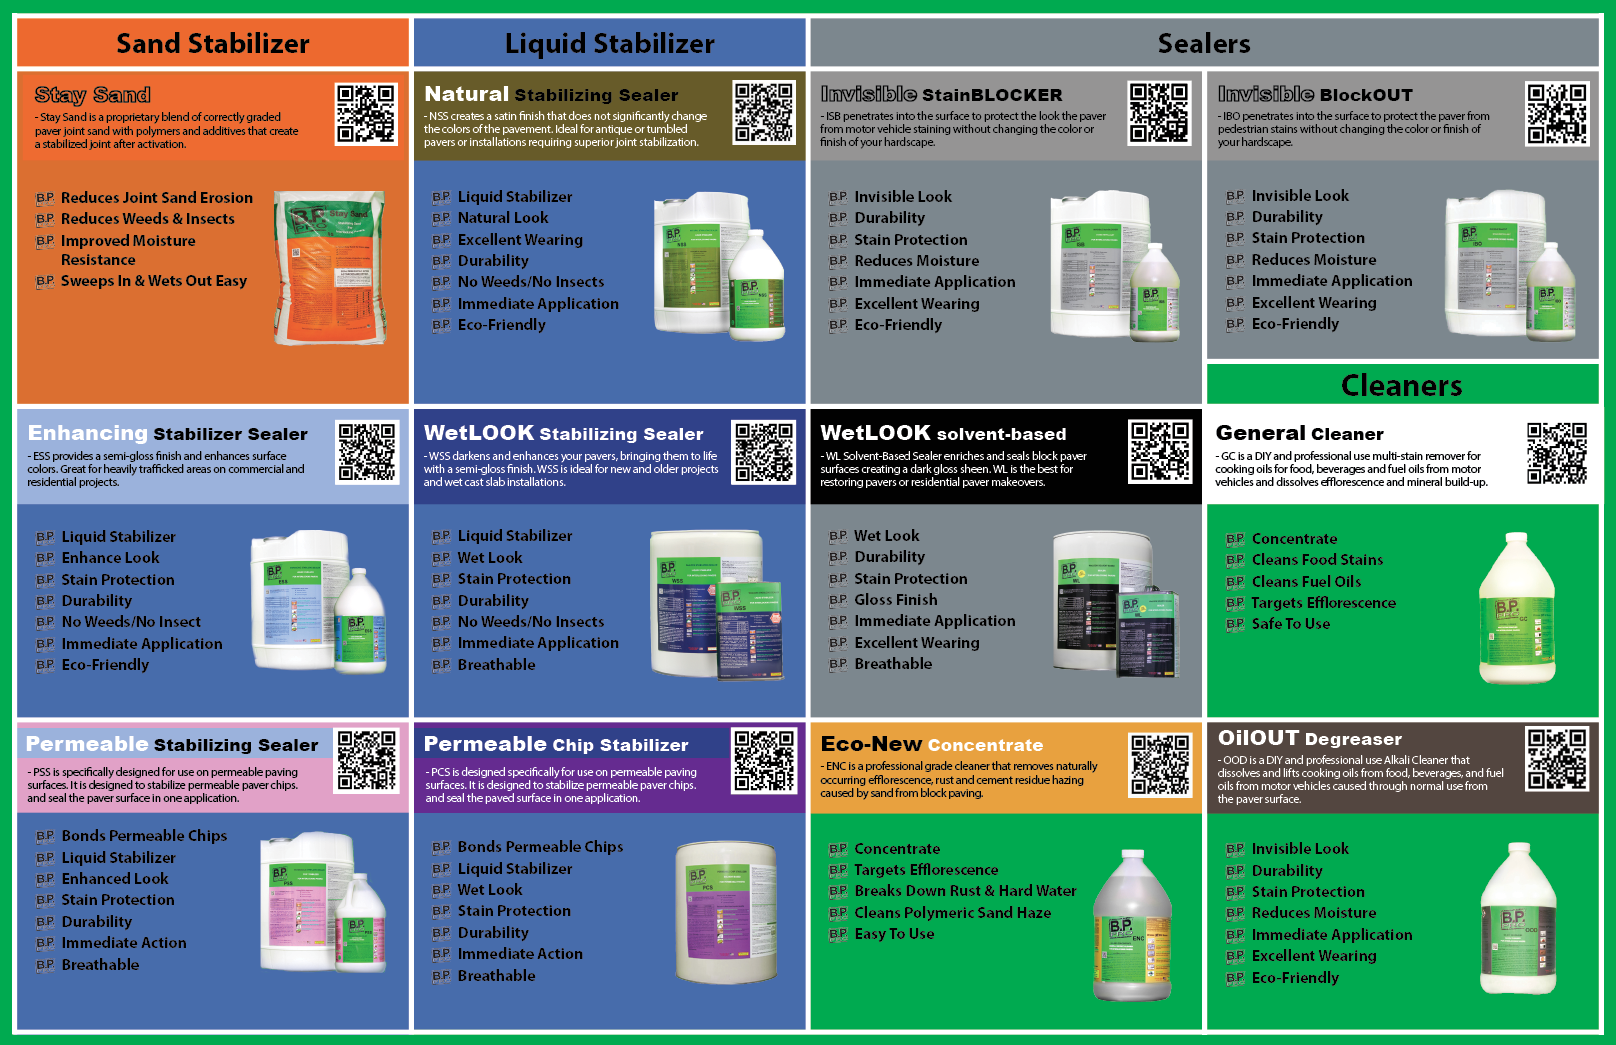 BP Pro Product Summary Brochure - Outside